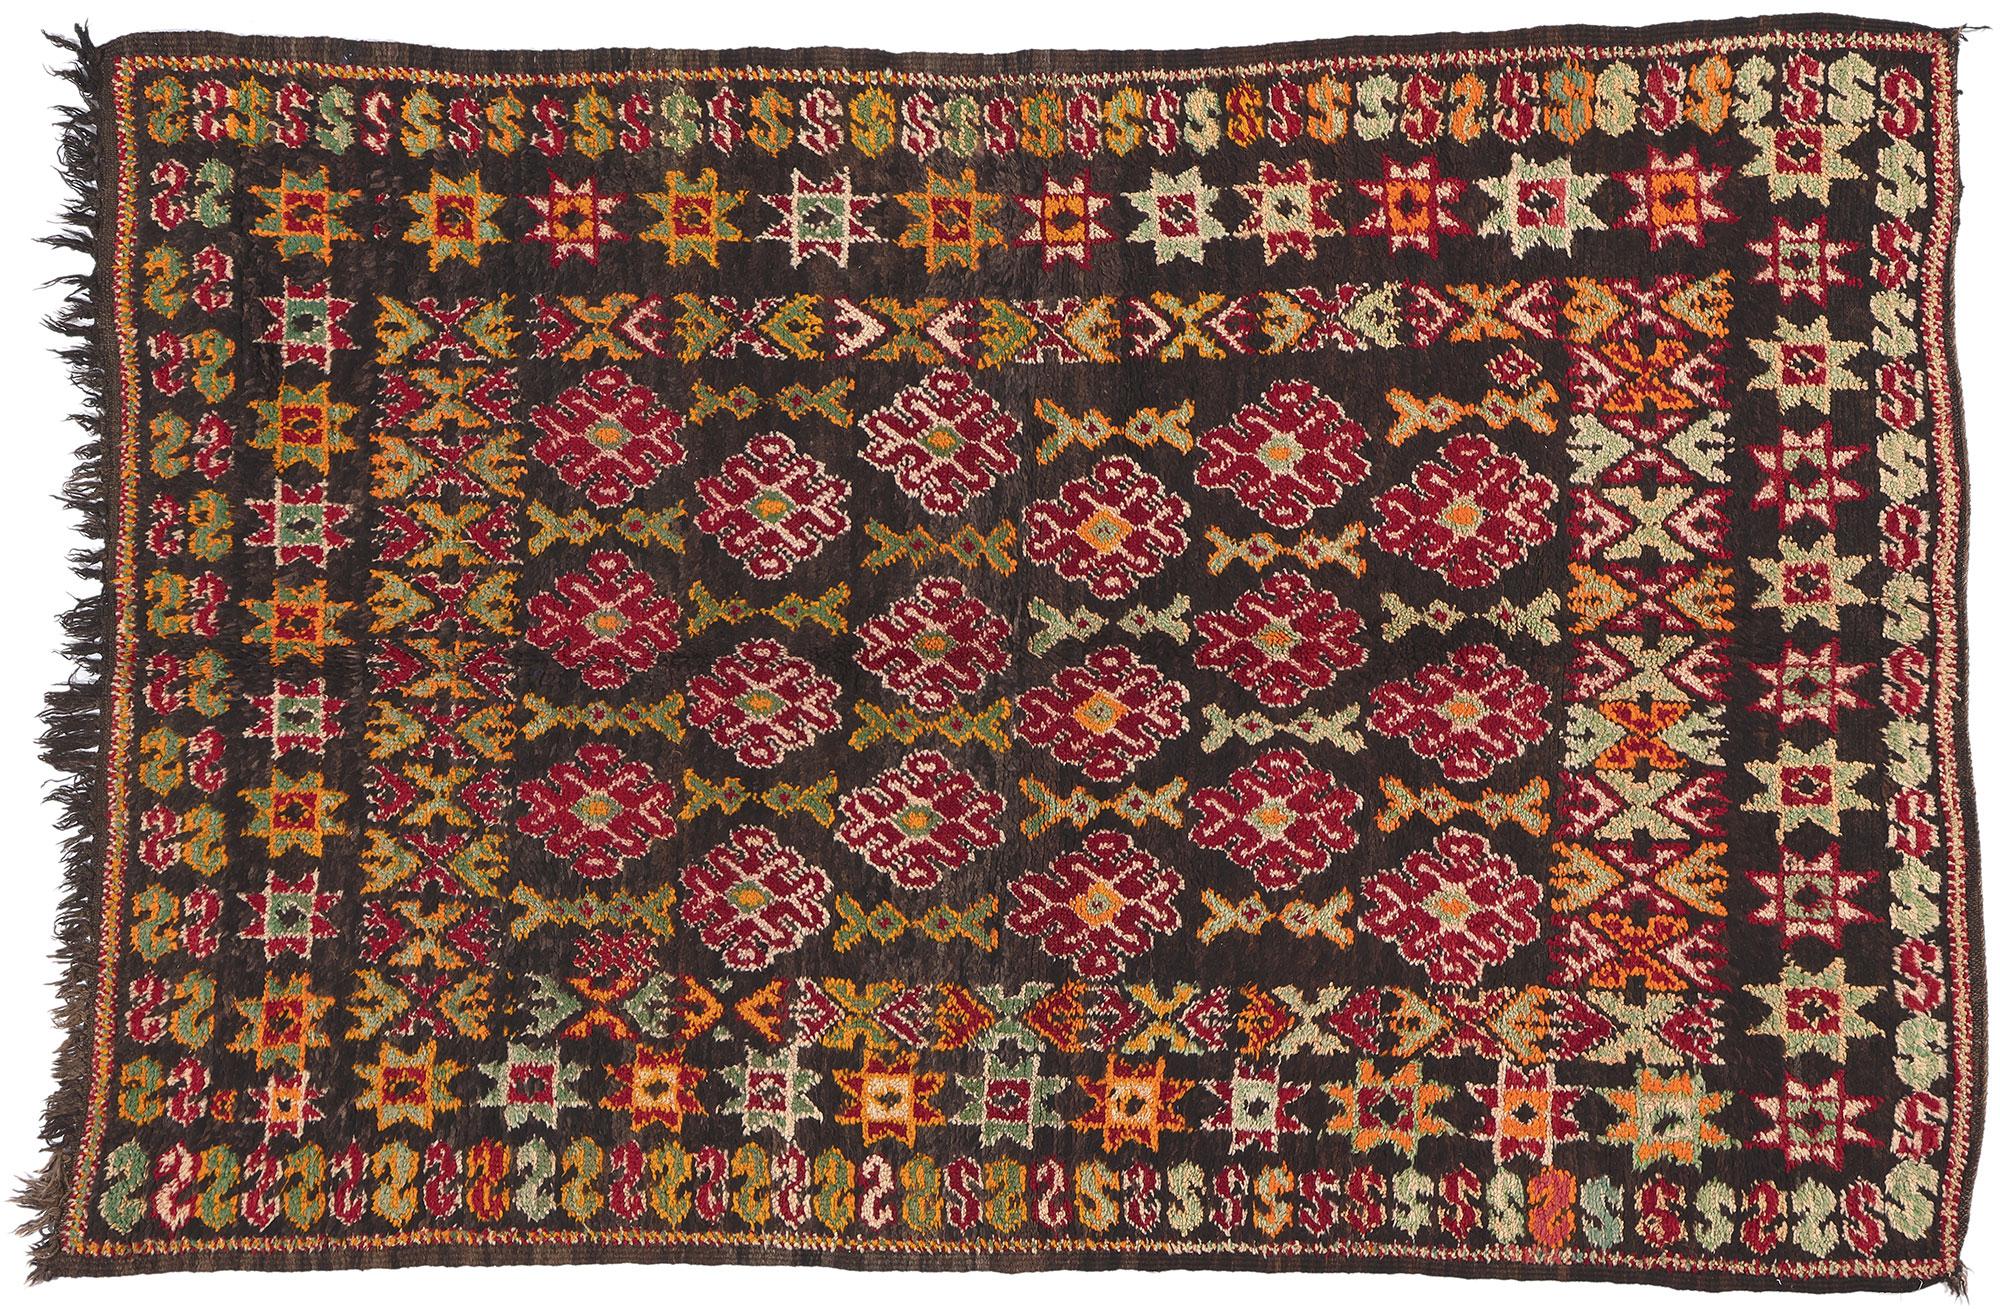 Vintage Beni MGuild Moroccan Rug , Tribal Enchantment Meets Midcentury Modern For Sale 2